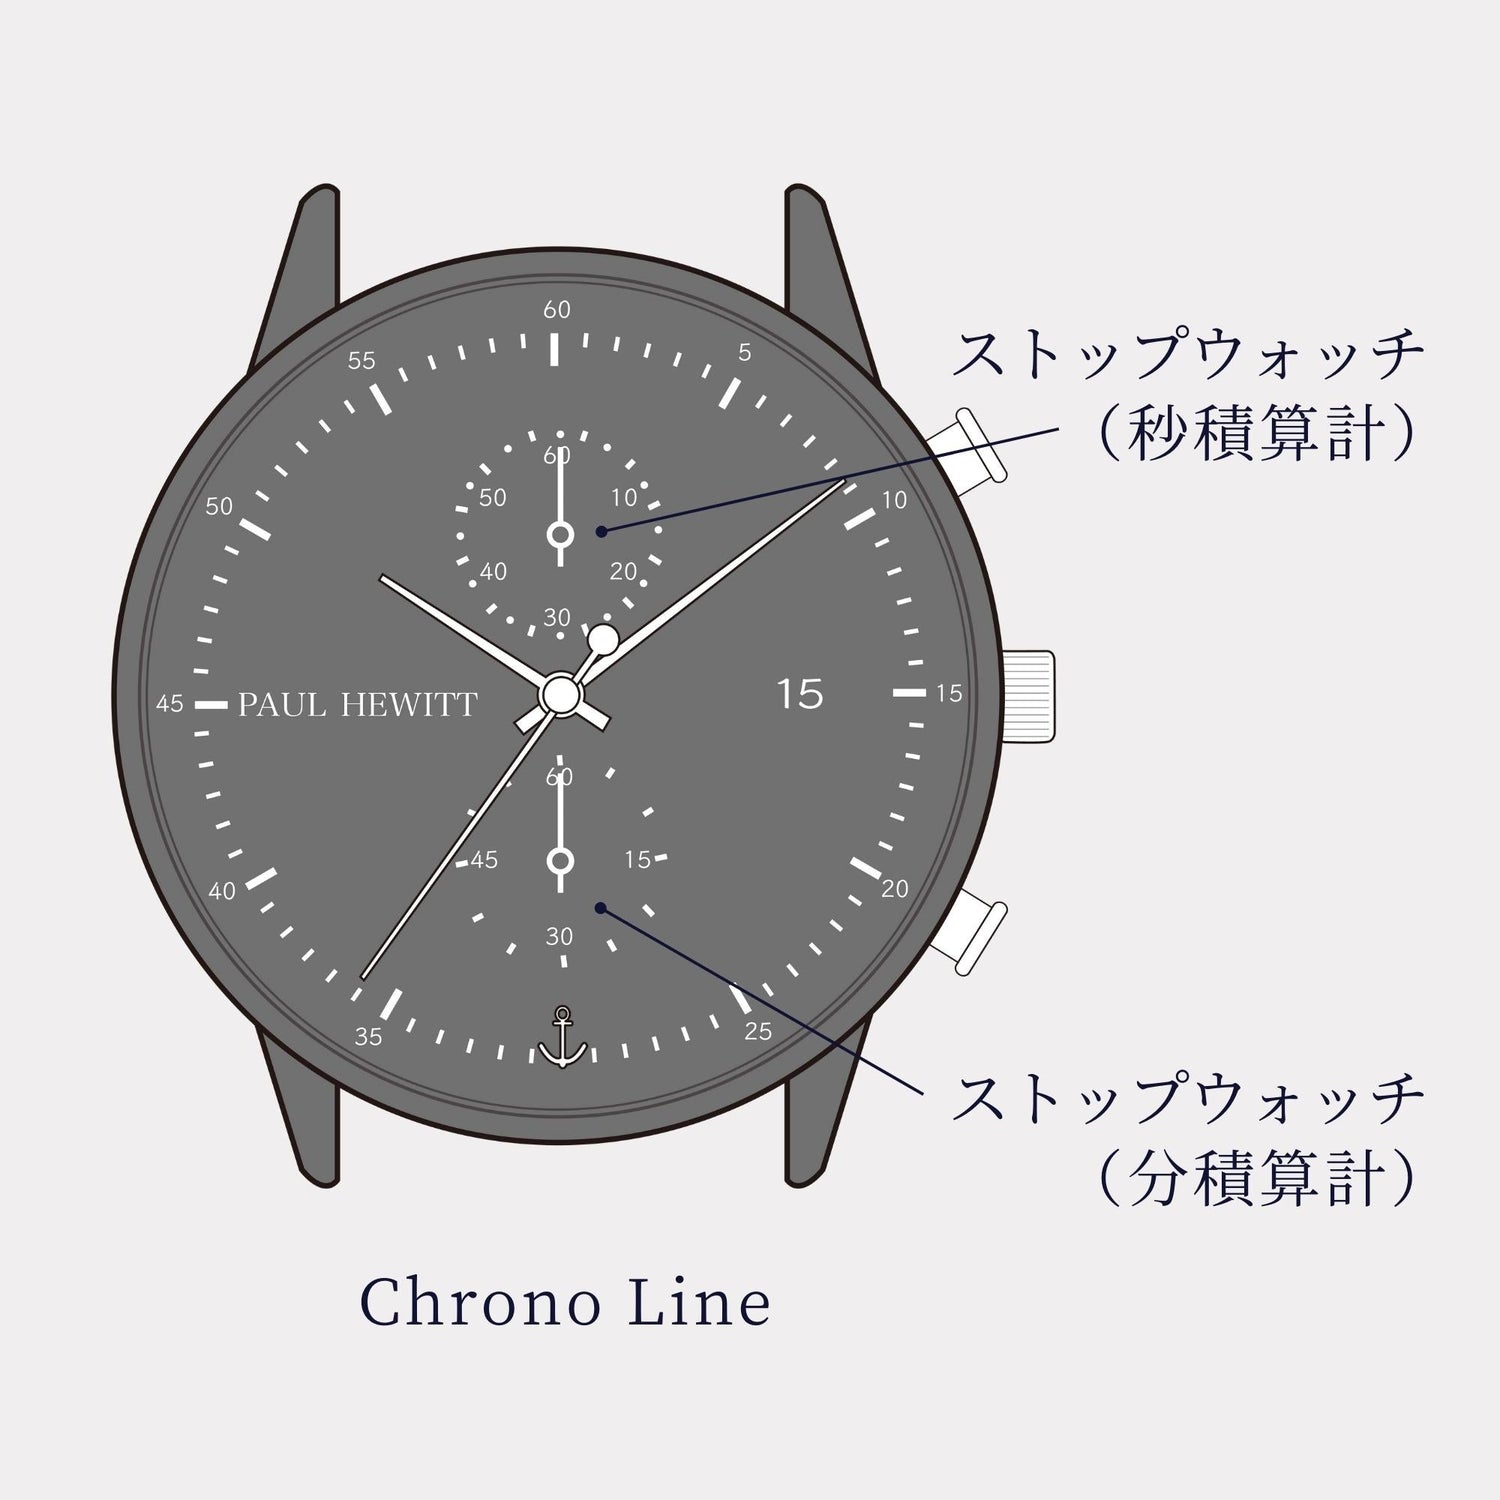 Chrono Line ミッドナイトオーシャン/グレーブルー - ポールヒューイット日本公式サイト